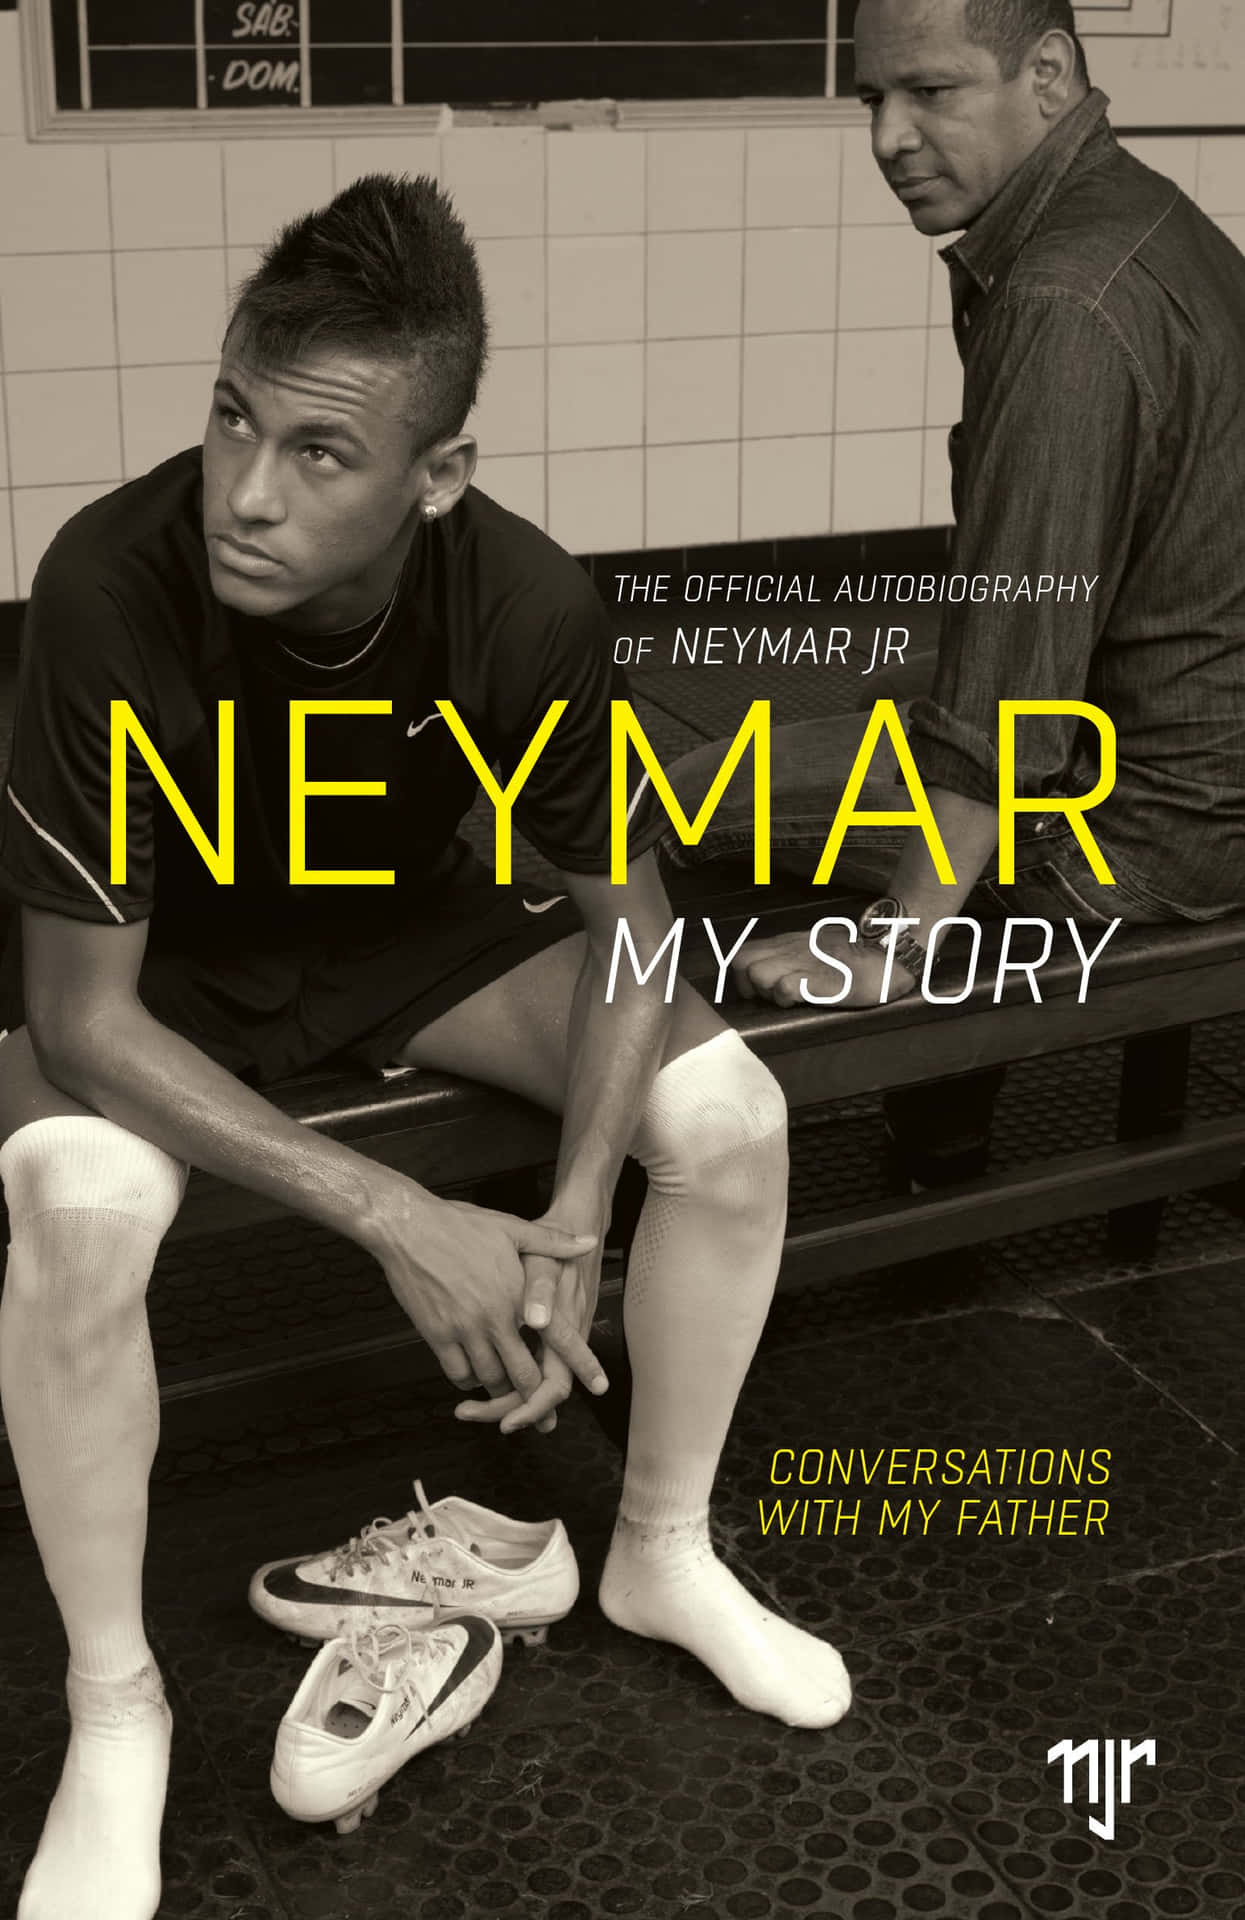 "brazilian Star Neymar Playing The Beautiful Game"